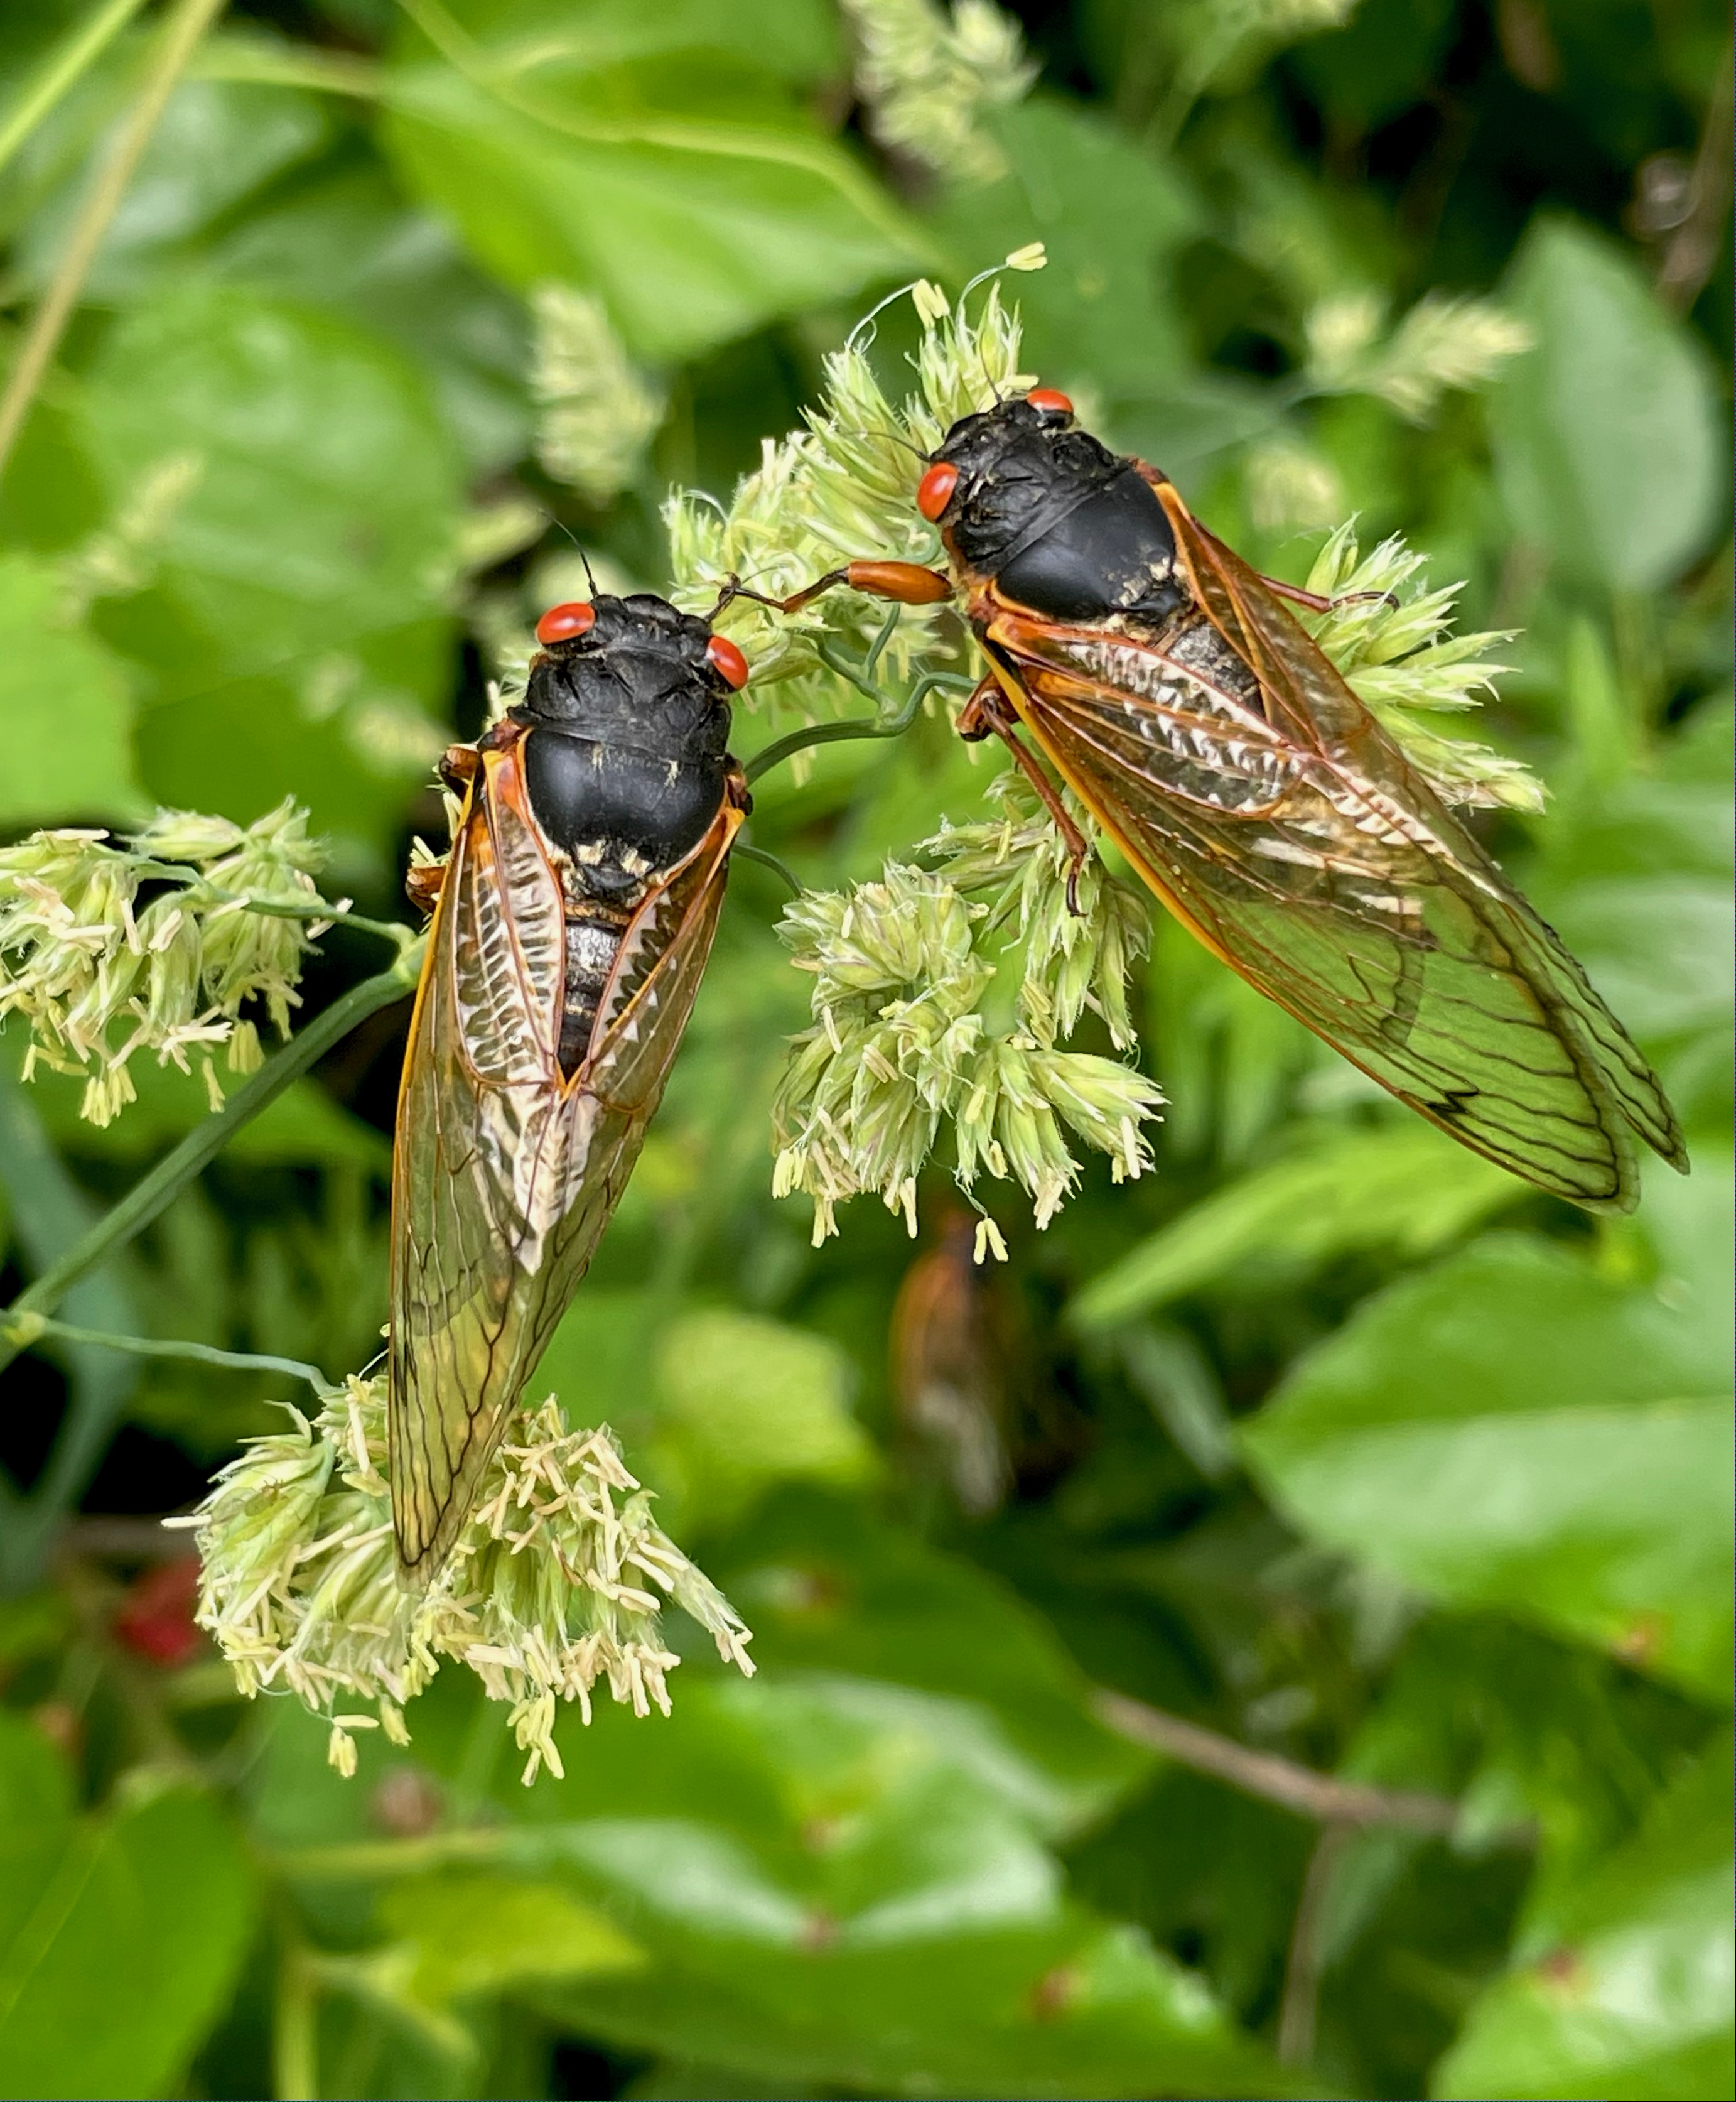 two adult cicadas